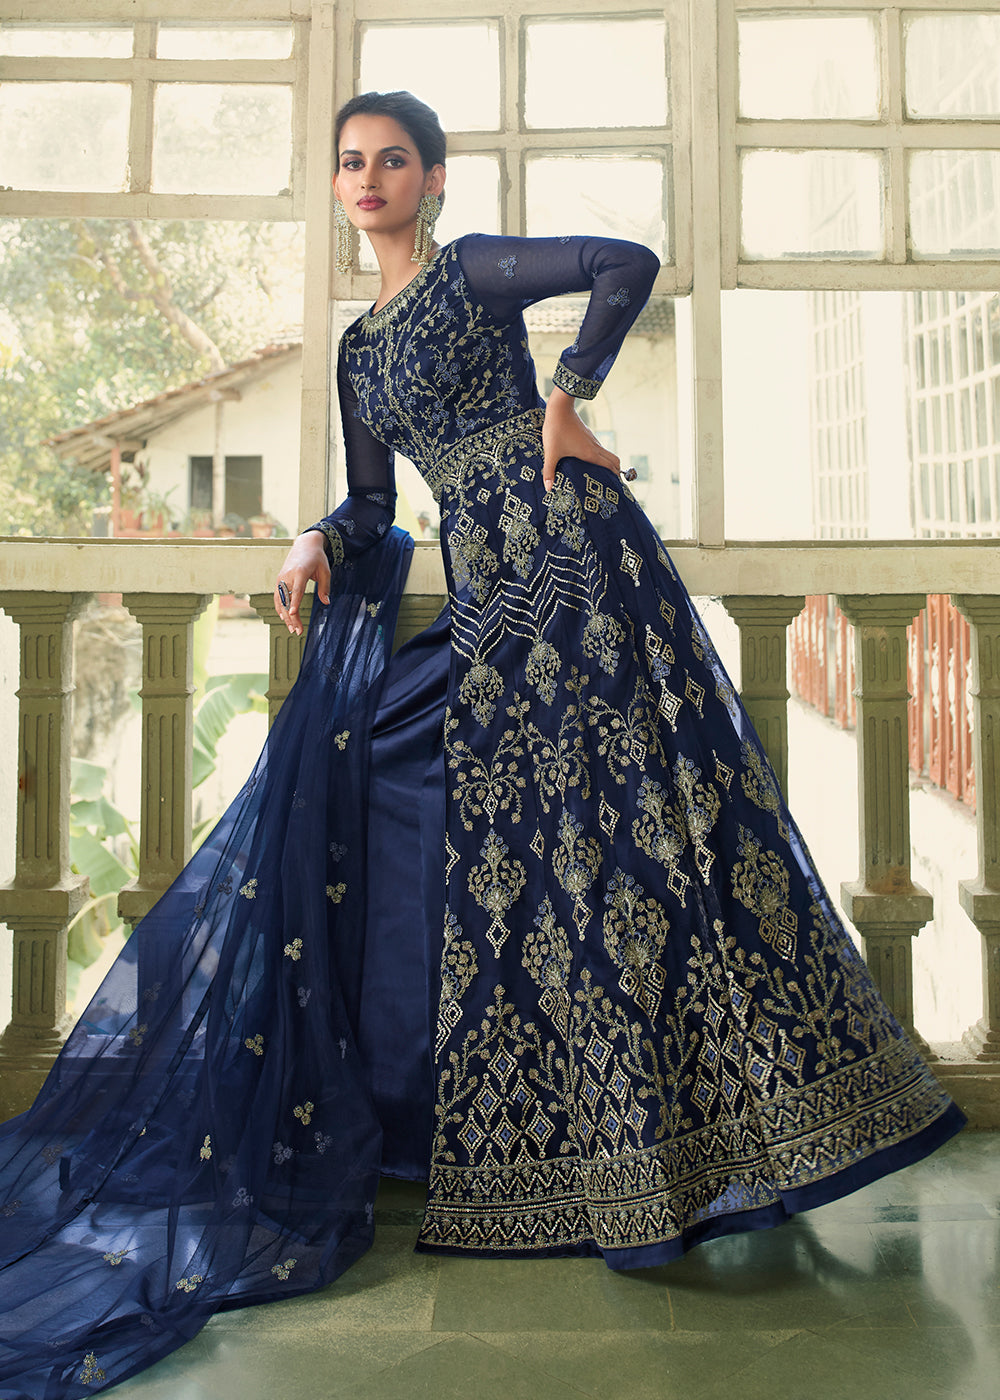 Buy Now Slit Style Ravishing Blue Zari Embroidered Party Festive Anarkali Suit Online in USA, UK, Australia, New Zealand, Canada & Worldwide at Empress Clothing. 